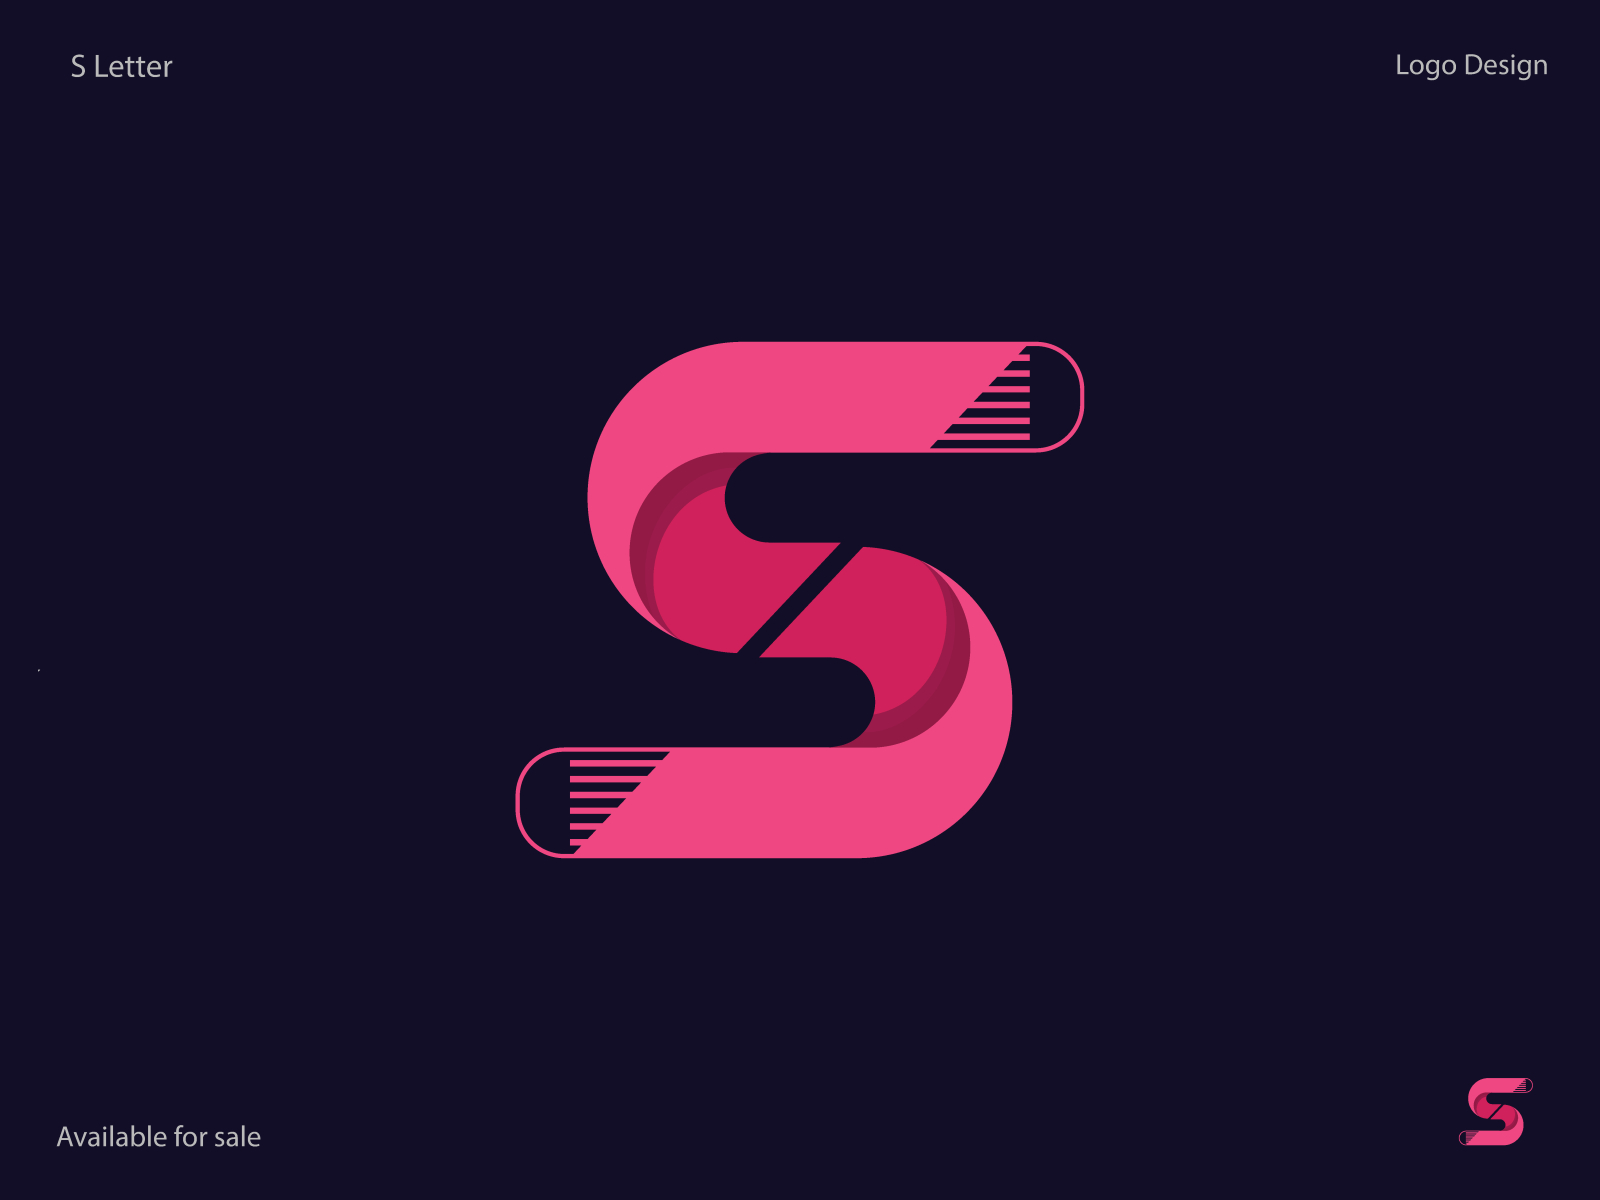 S Modern Initial Letter Logo Design Concept - Unused by Shihab | Logo ...